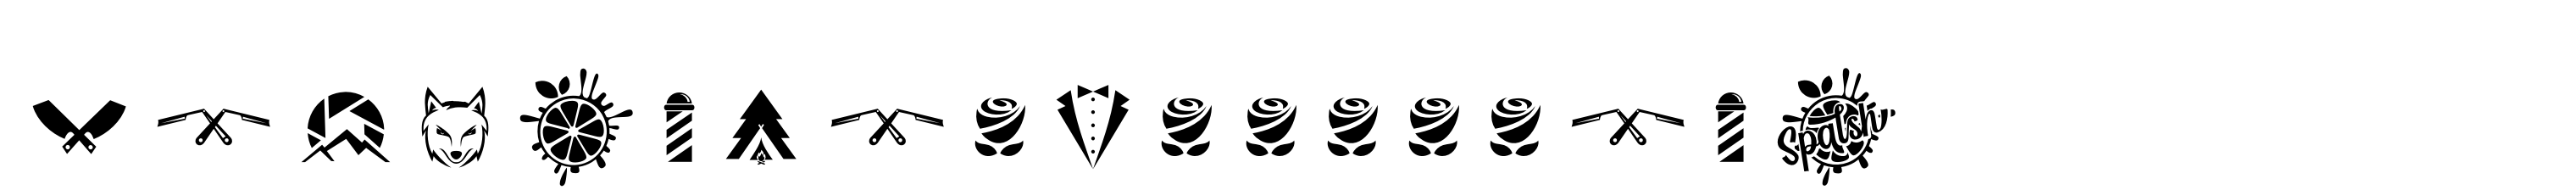 Yackien Logo doodles